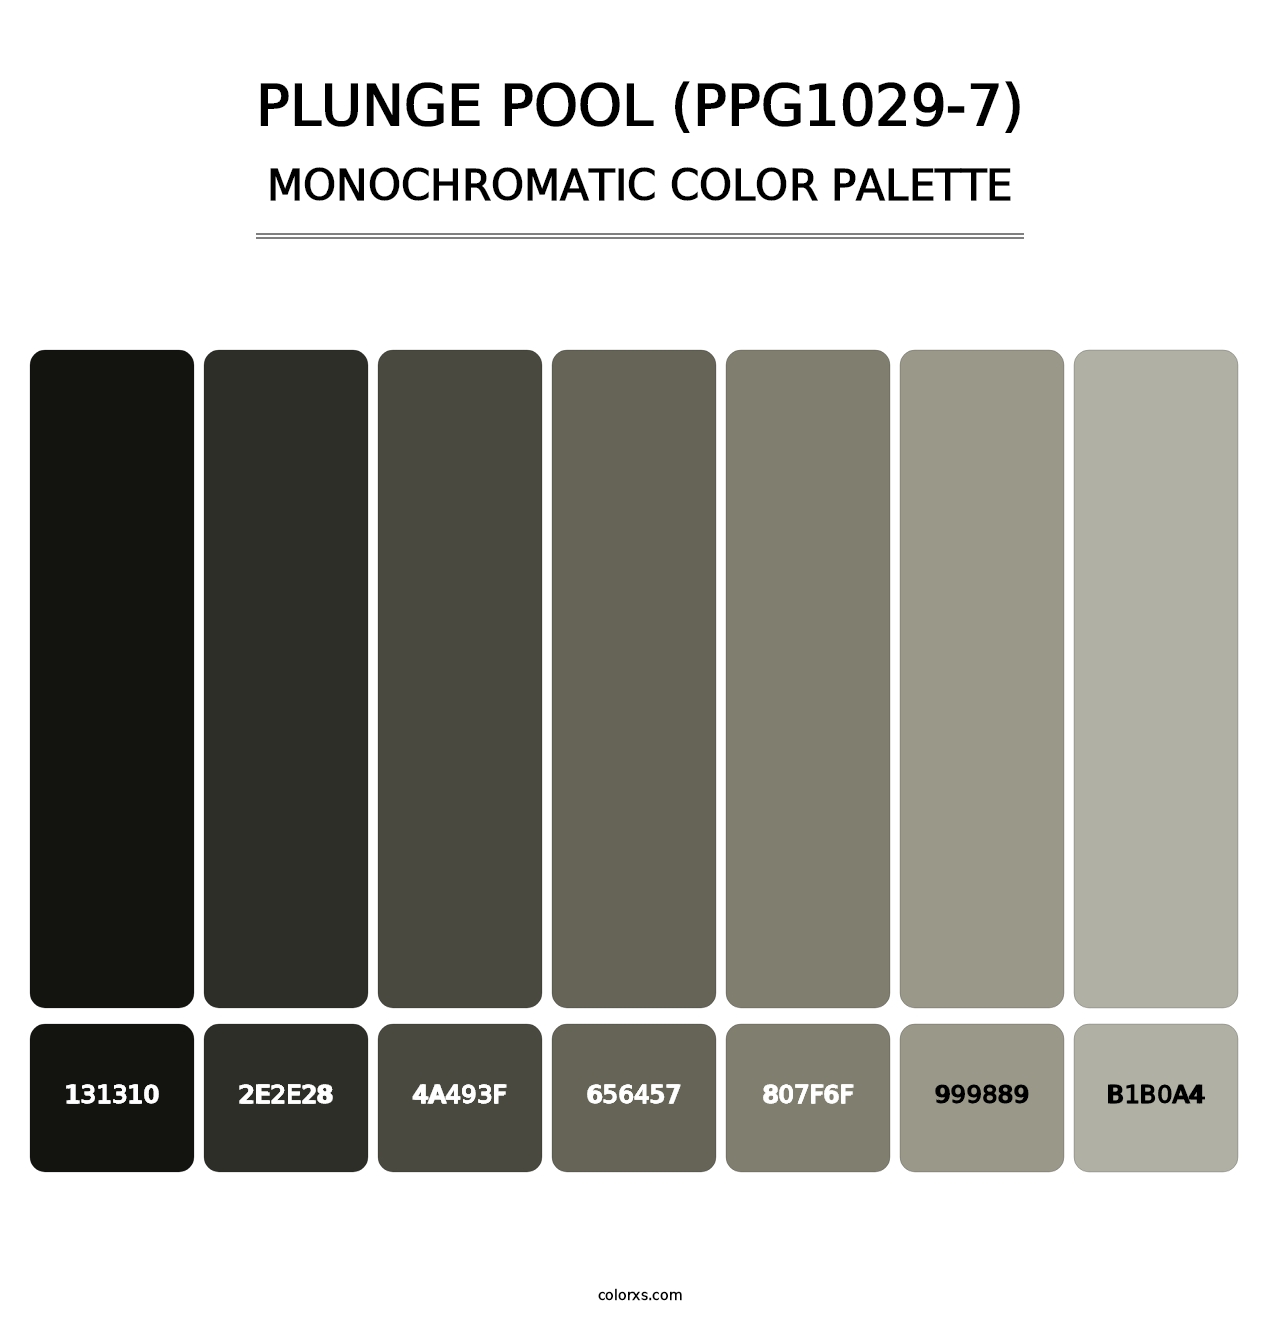 Plunge Pool (PPG1029-7) - Monochromatic Color Palette